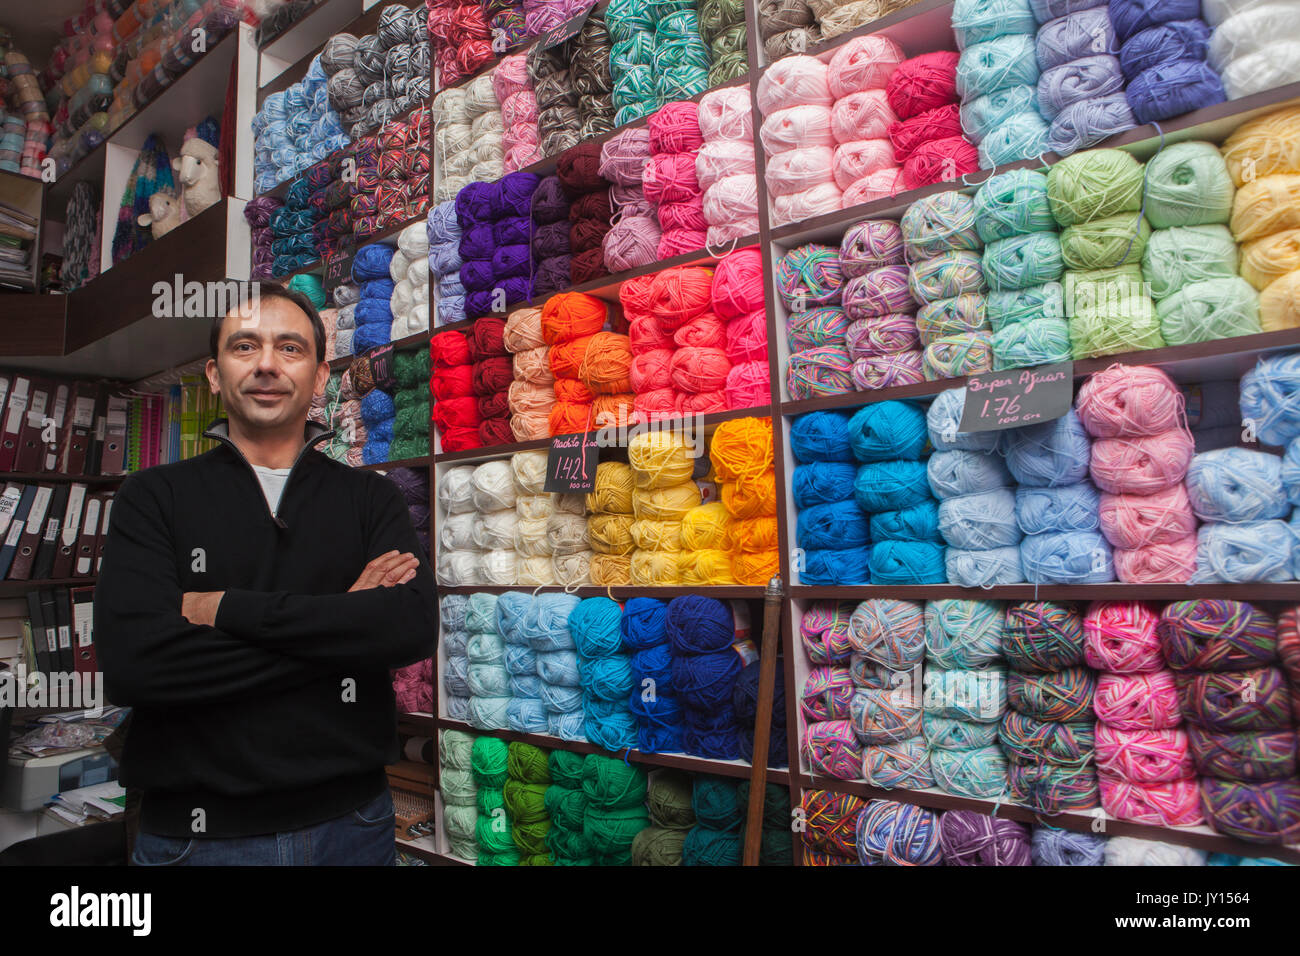 Mixed Race man posing at yarn store Banque D'Images